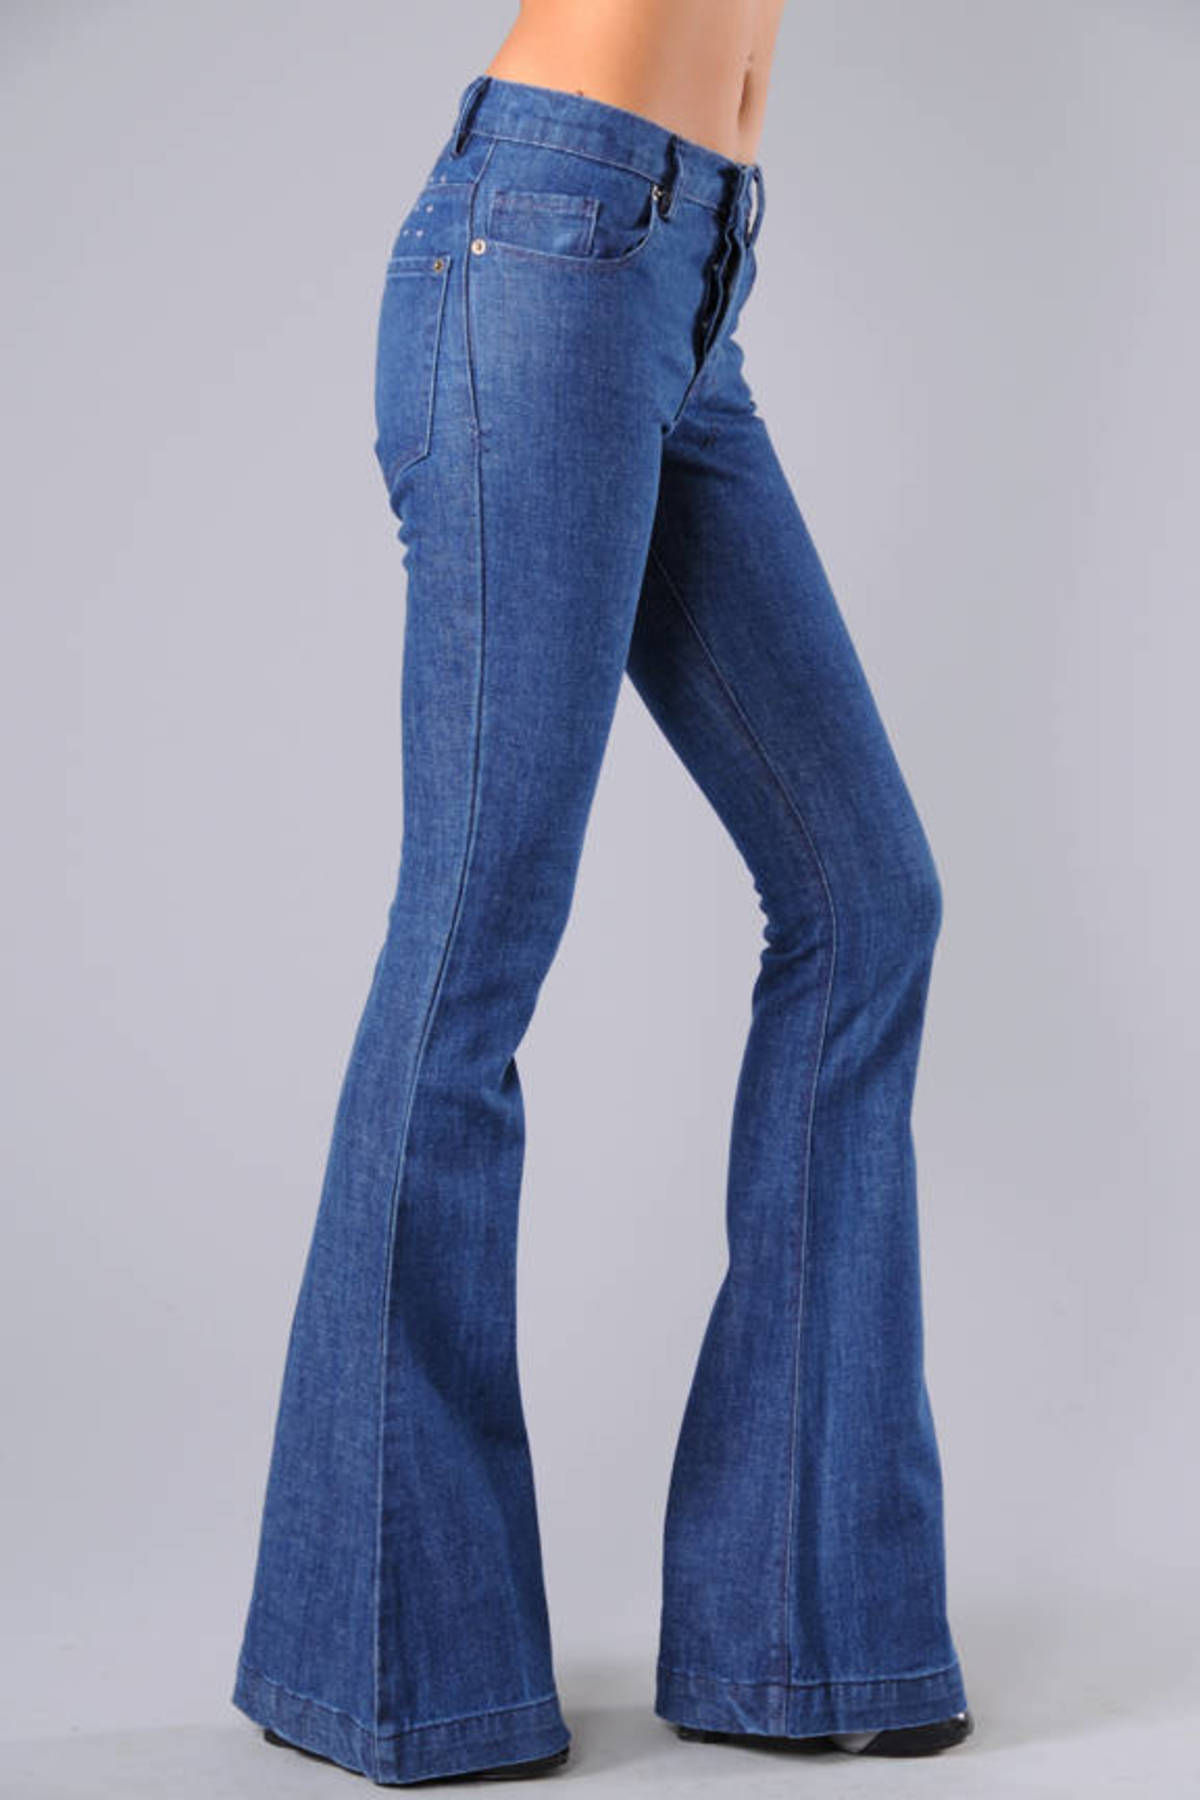 Joplin Flare Jeans in Clean Indigo - $68 | Tobi US